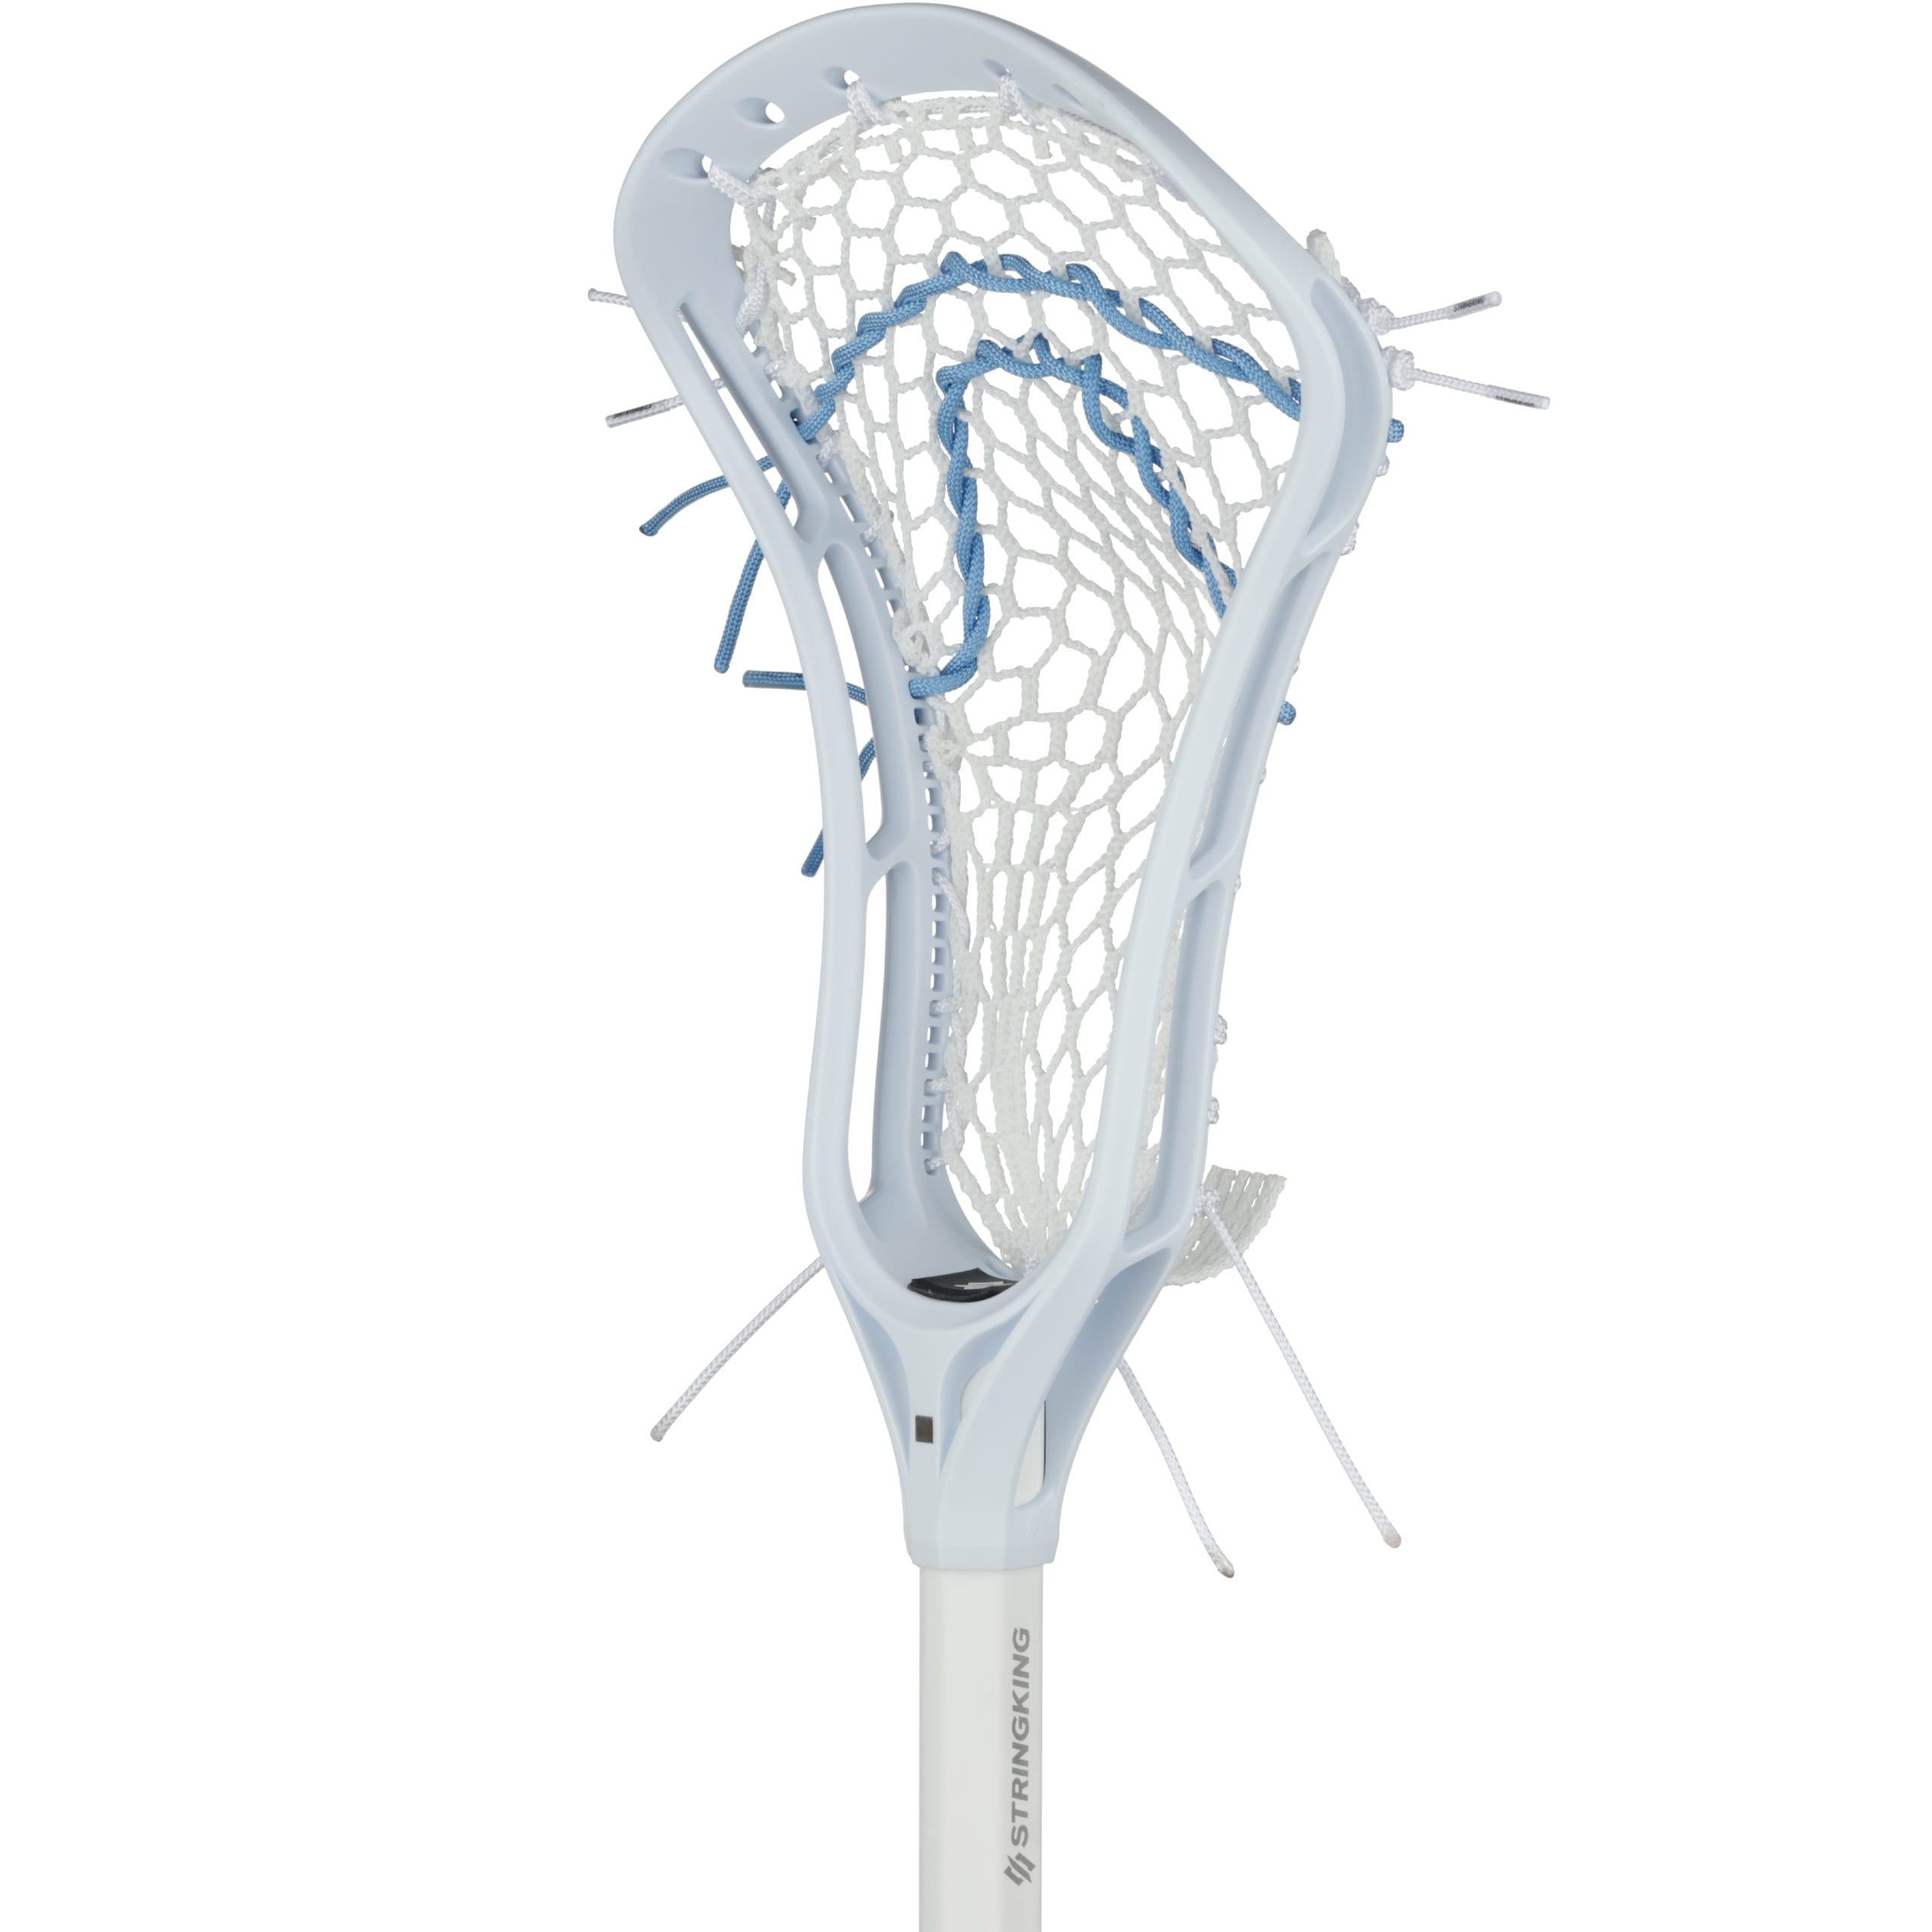 StringKing-Womens-Complete-Jr-Lacrosse-Stick-White-Carolina-Angle-scaled-1.jpg